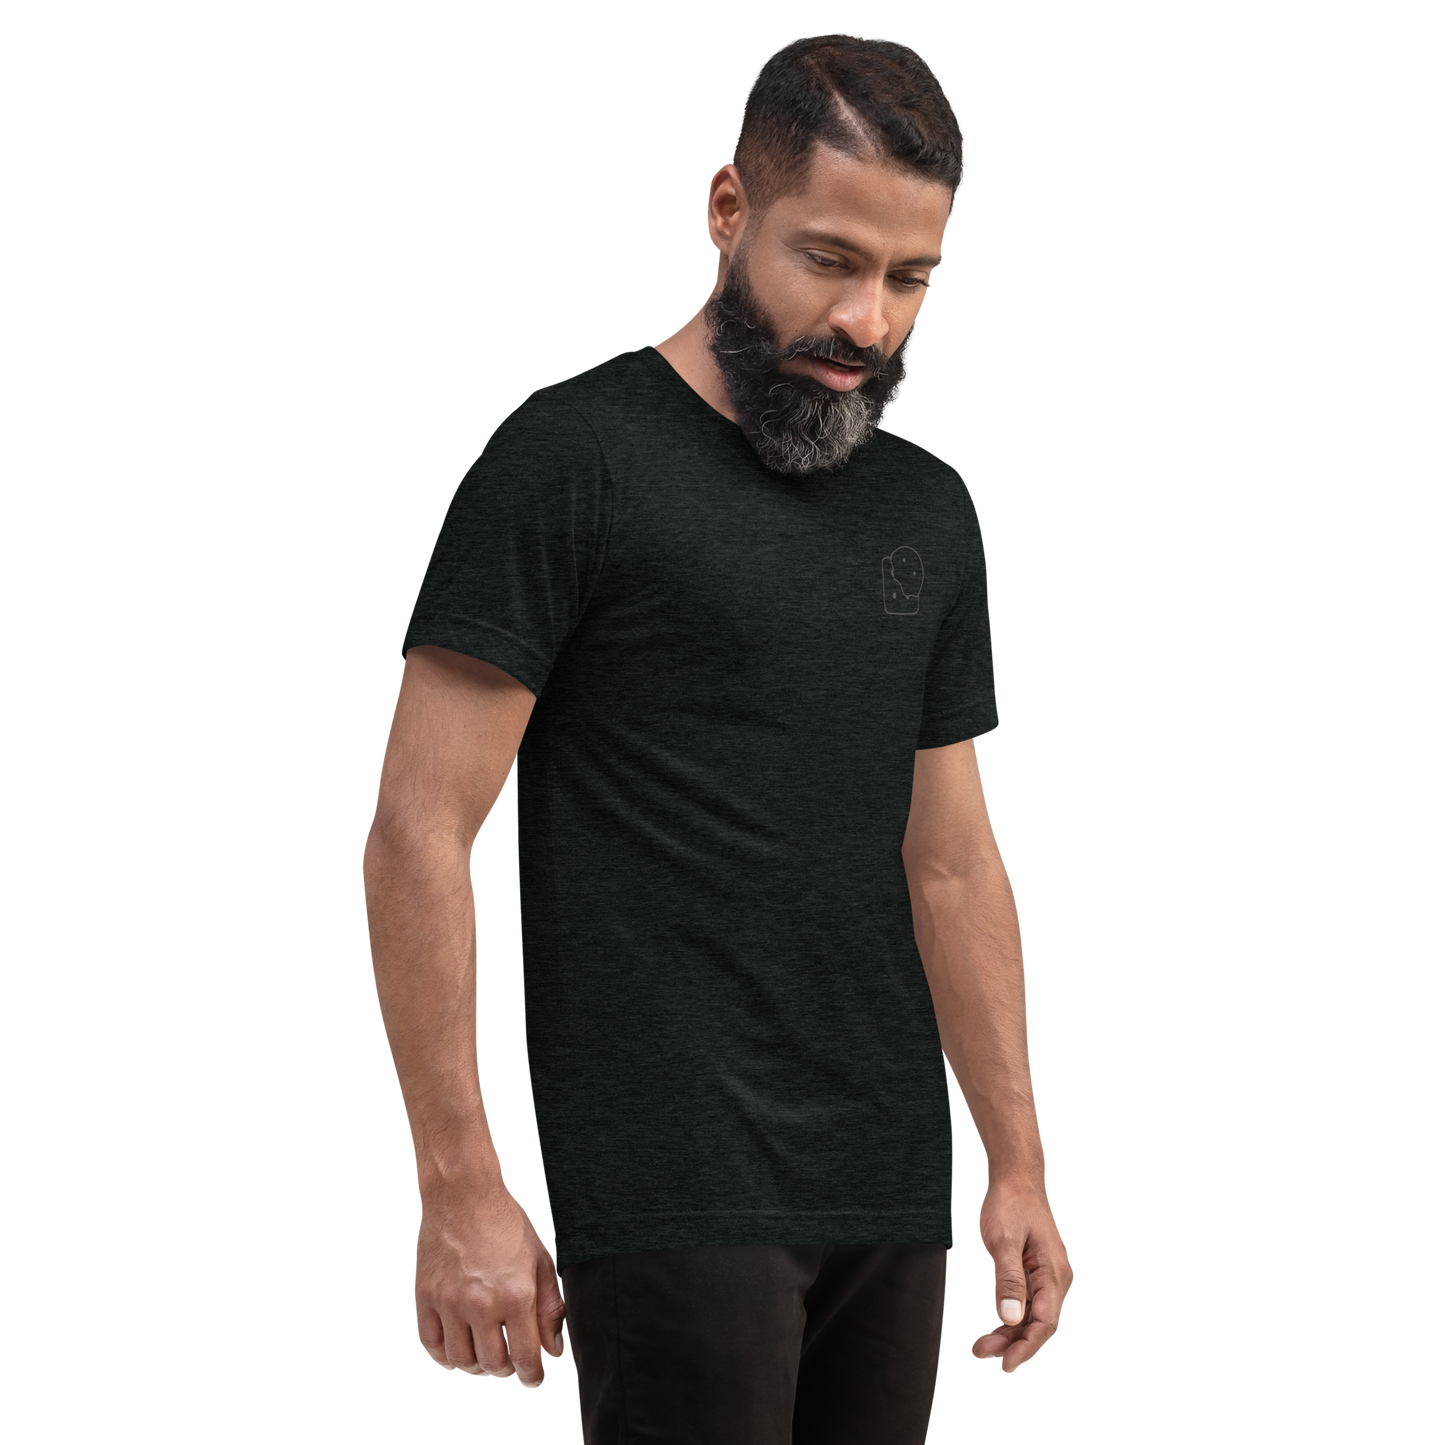 ZenCube Stealth Black T-Shirt